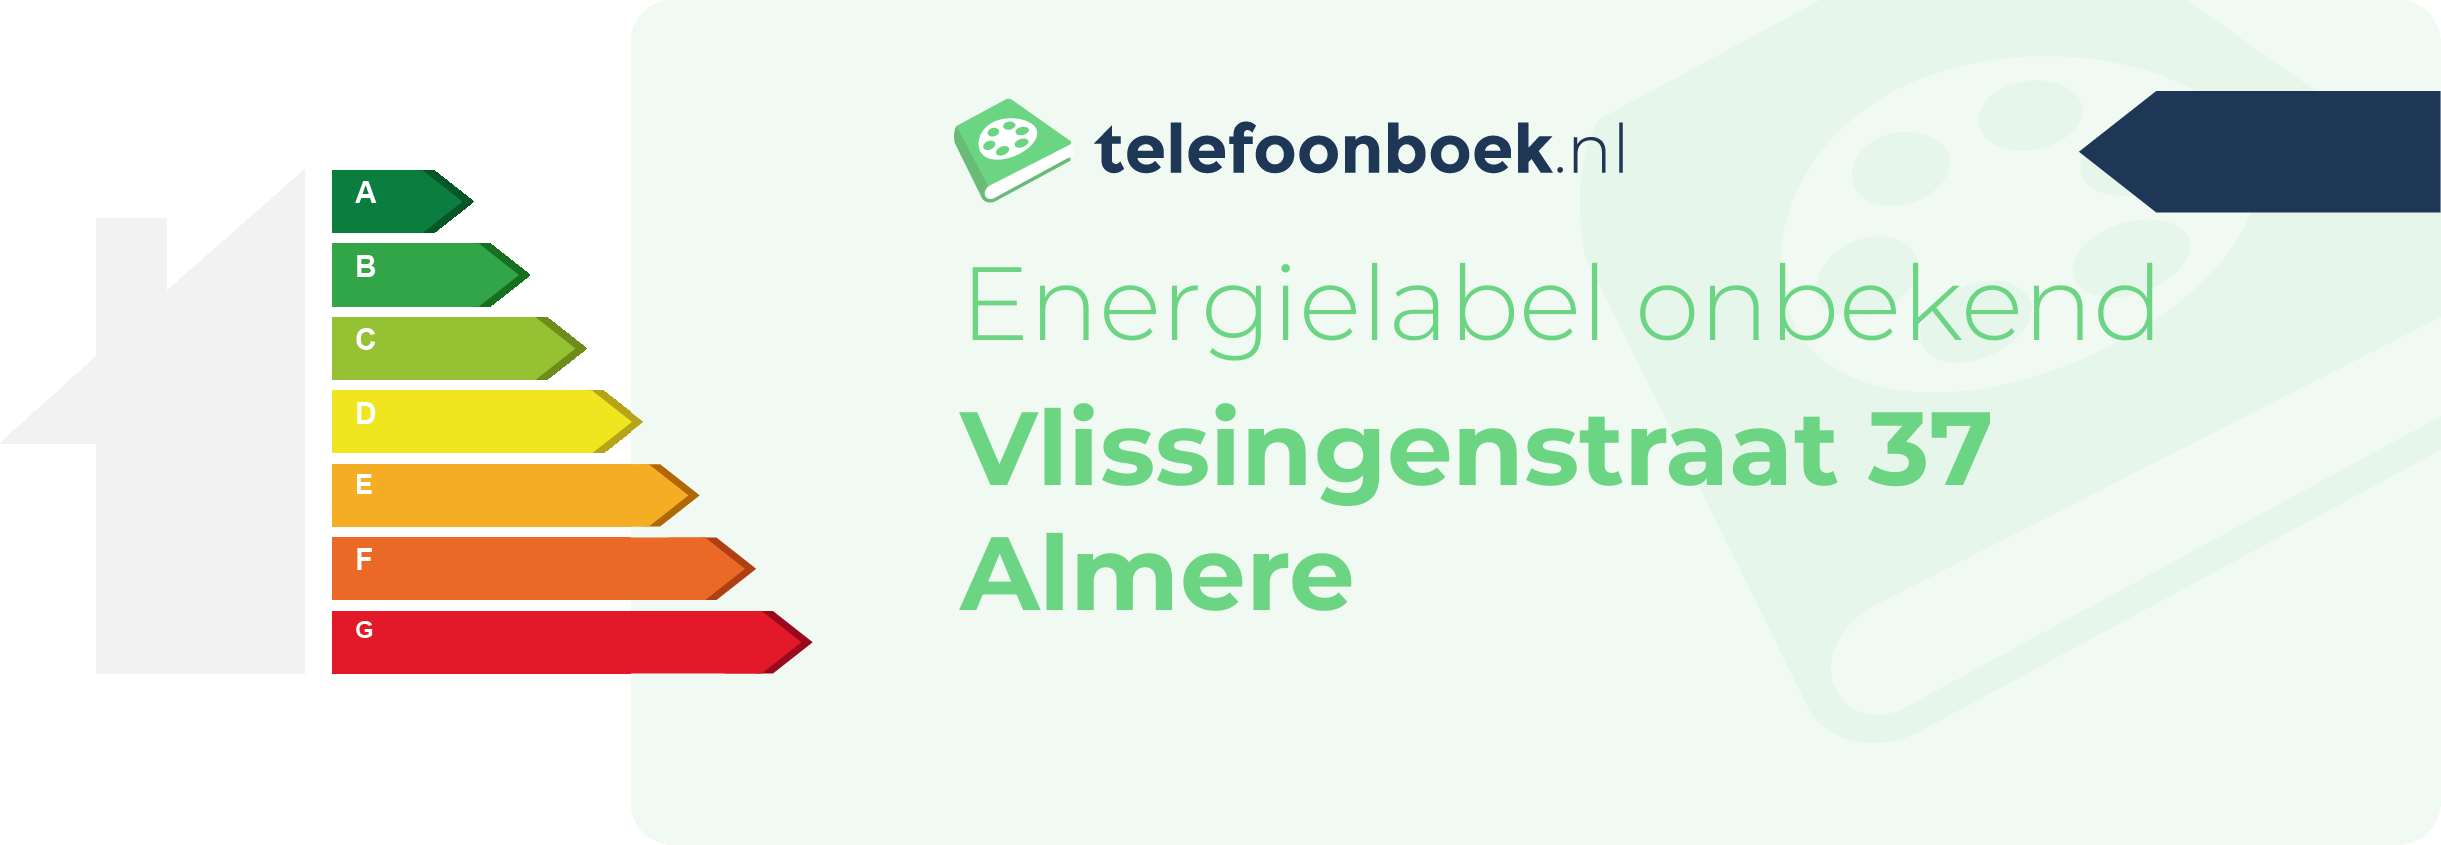 Energielabel Vlissingenstraat 37 Almere